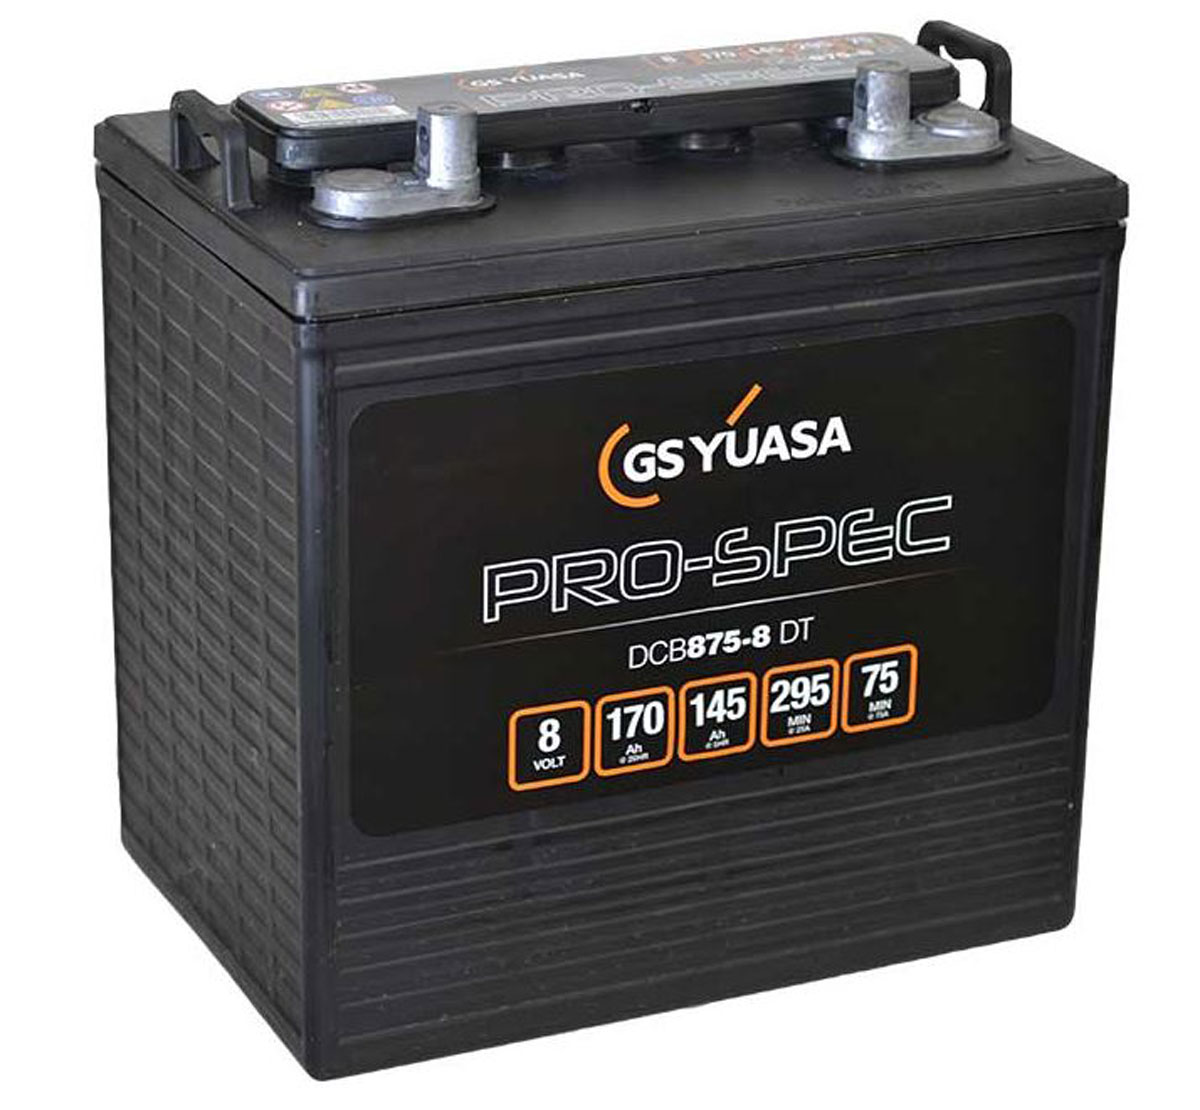 Yuasa Pro Spec DCB875-8 8V 170Ah Battery